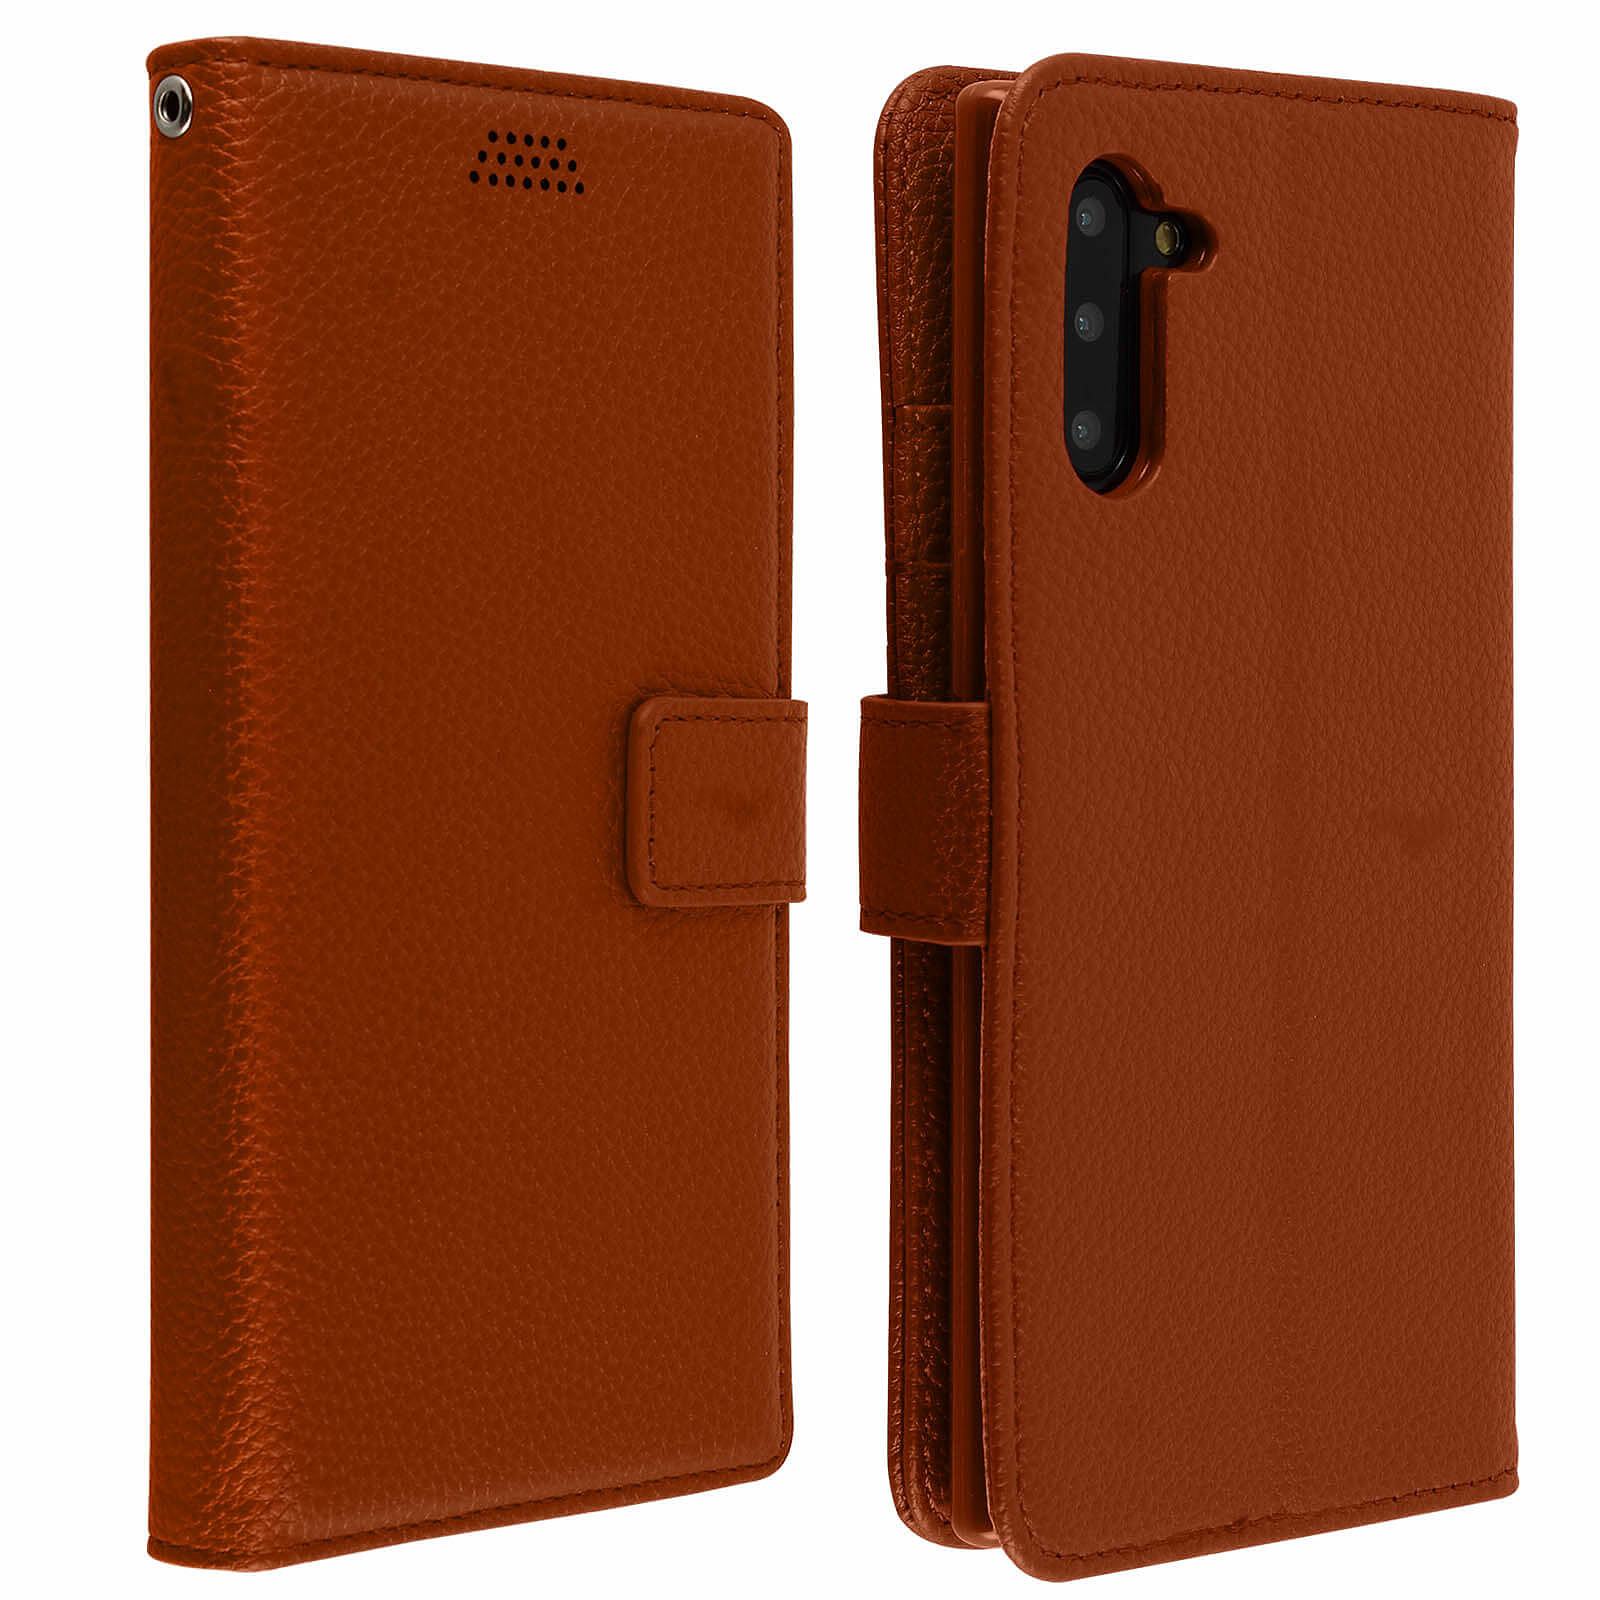 Avizar Etui folio Marron aco-cuir pour Samsung Galaxy Note 10 - Coque telephone Avizar